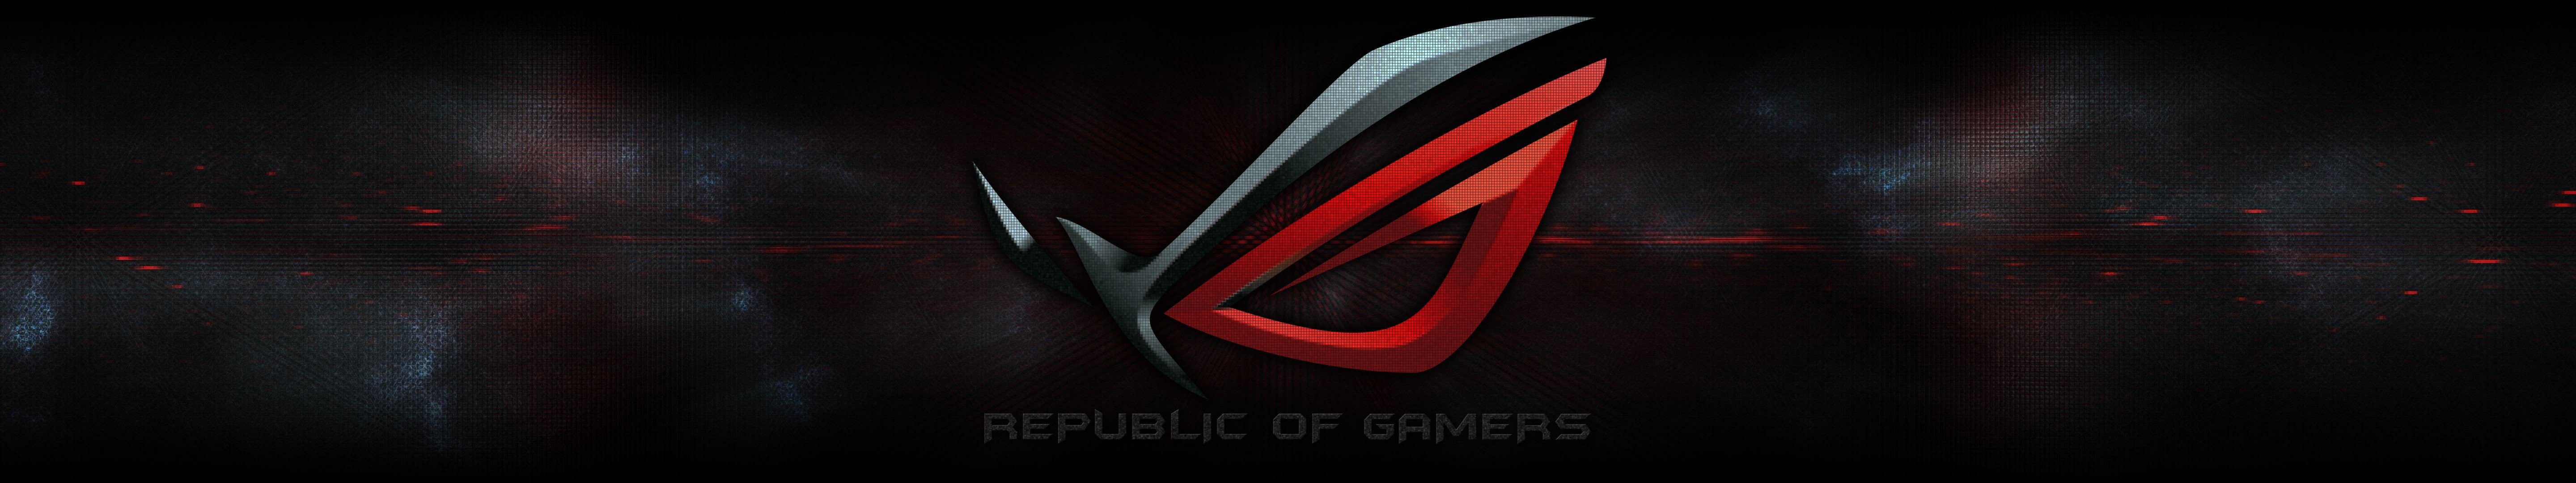 Republic of Gamers, Logo Wallpaper